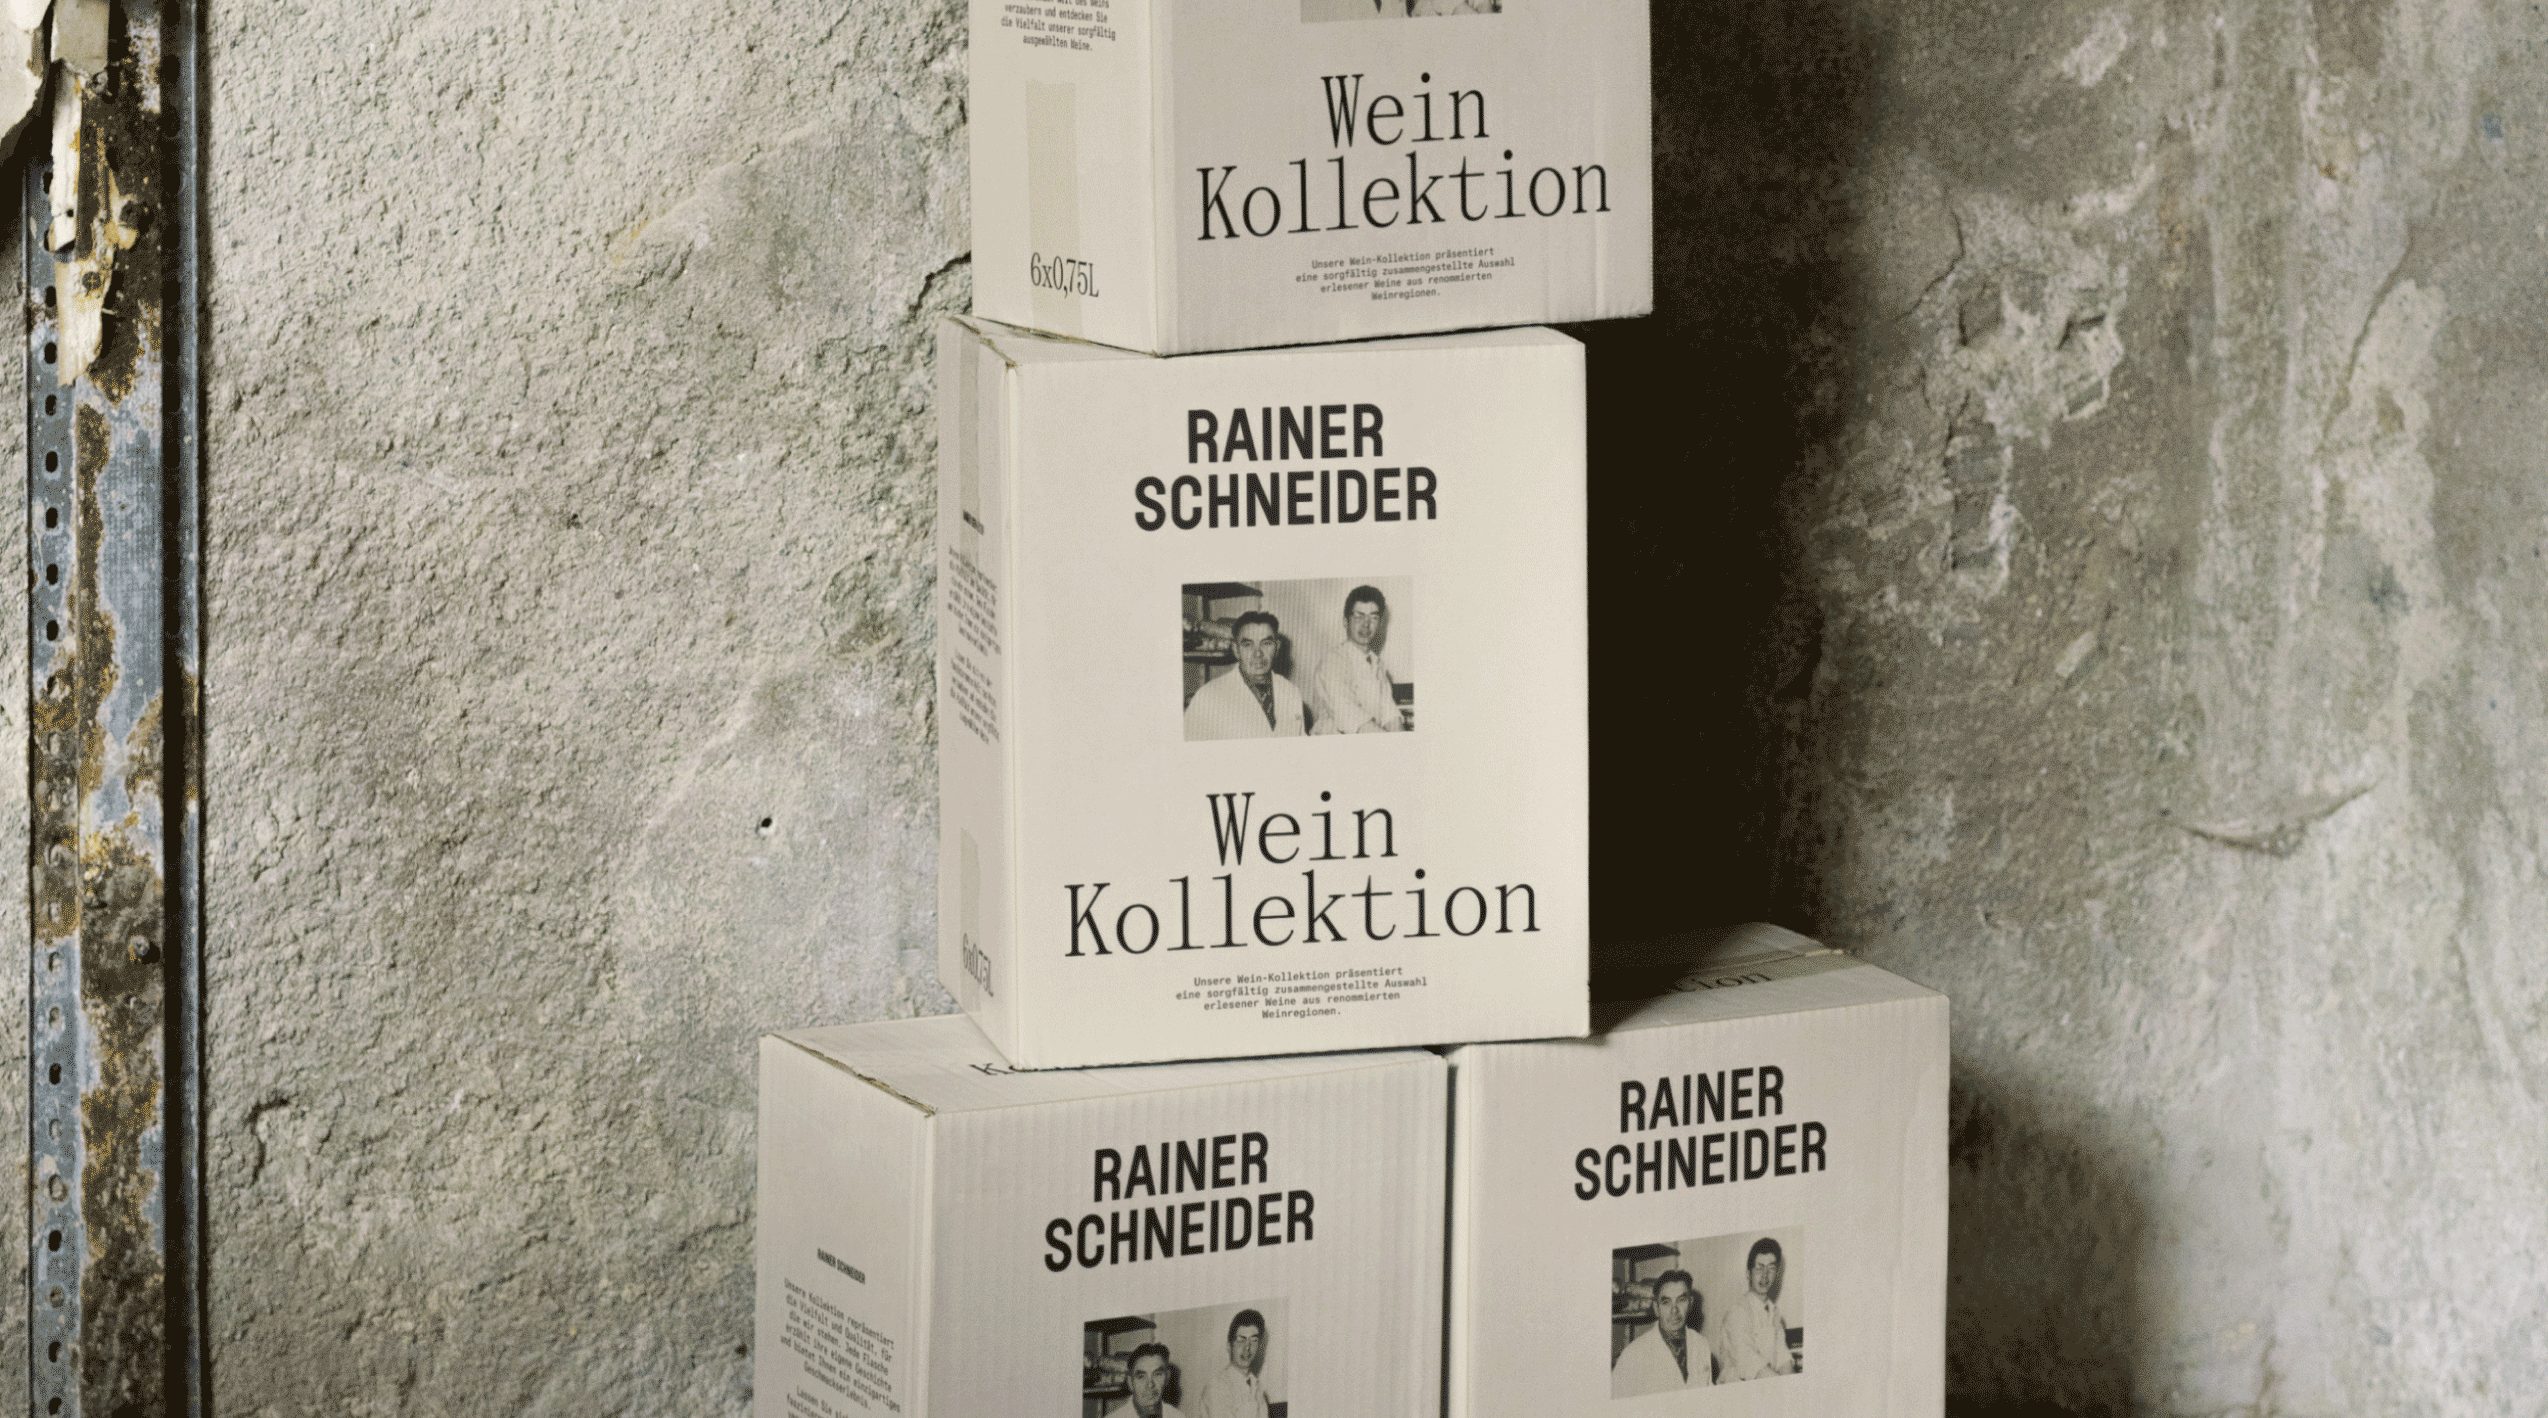 PaulWatmough-Rainer-Schneider-box-of-wine